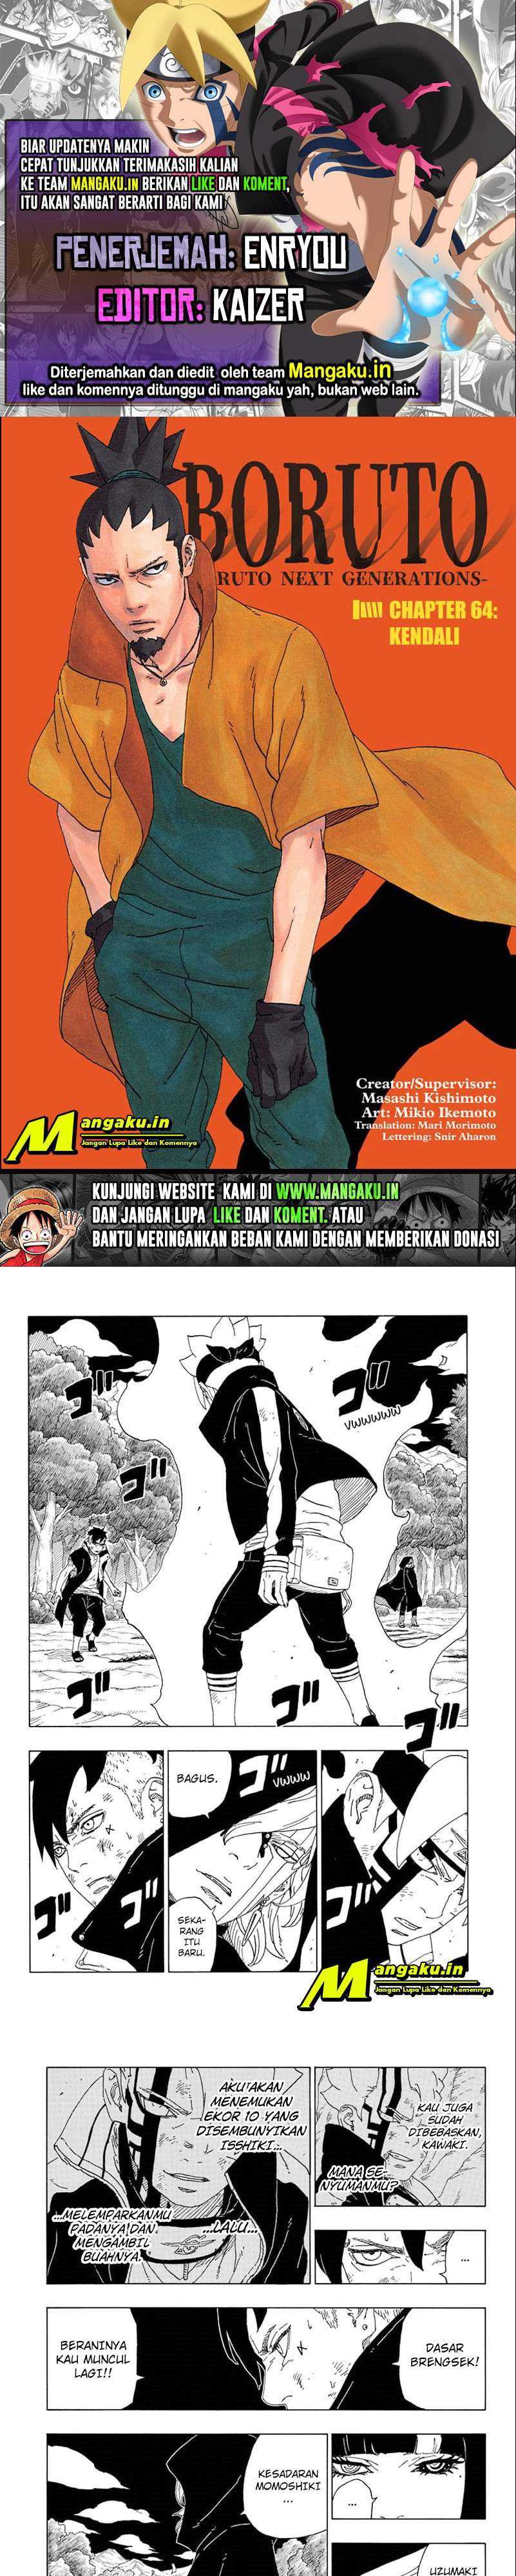 Boruto: Naruto Next Generations: Chapter 64.1 - Page 1